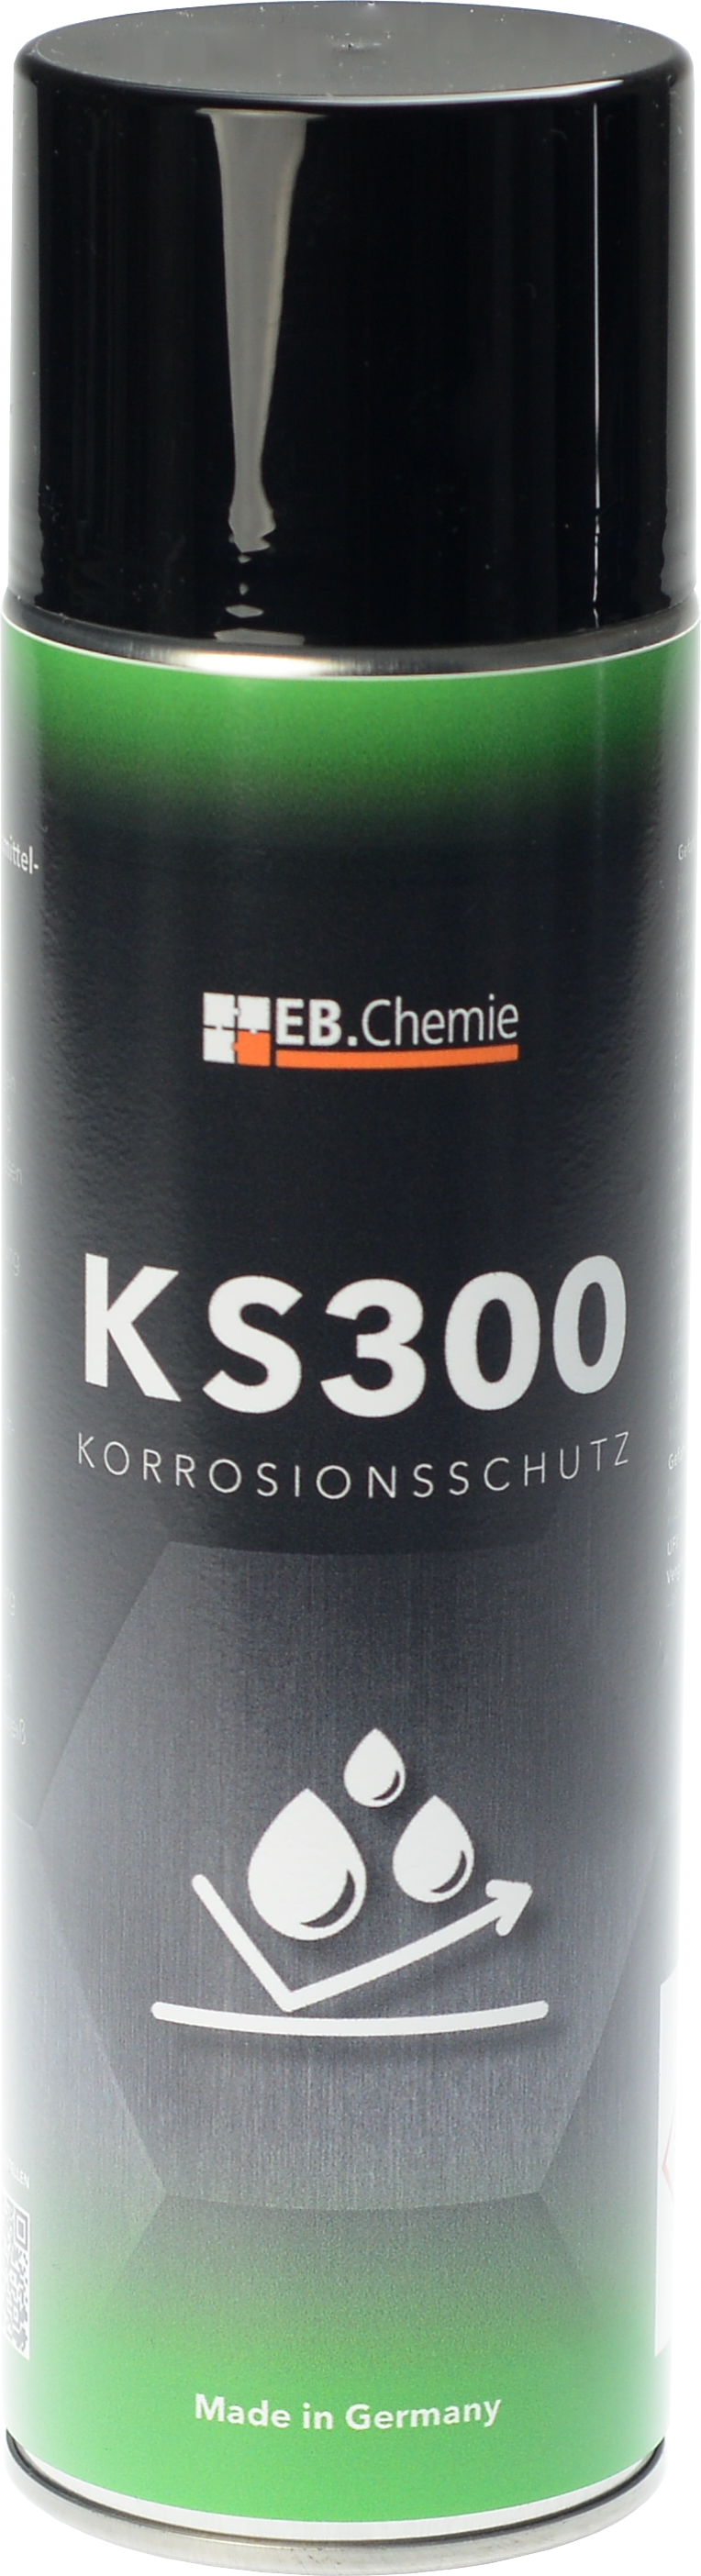 KS300 - Korrosionsschutz